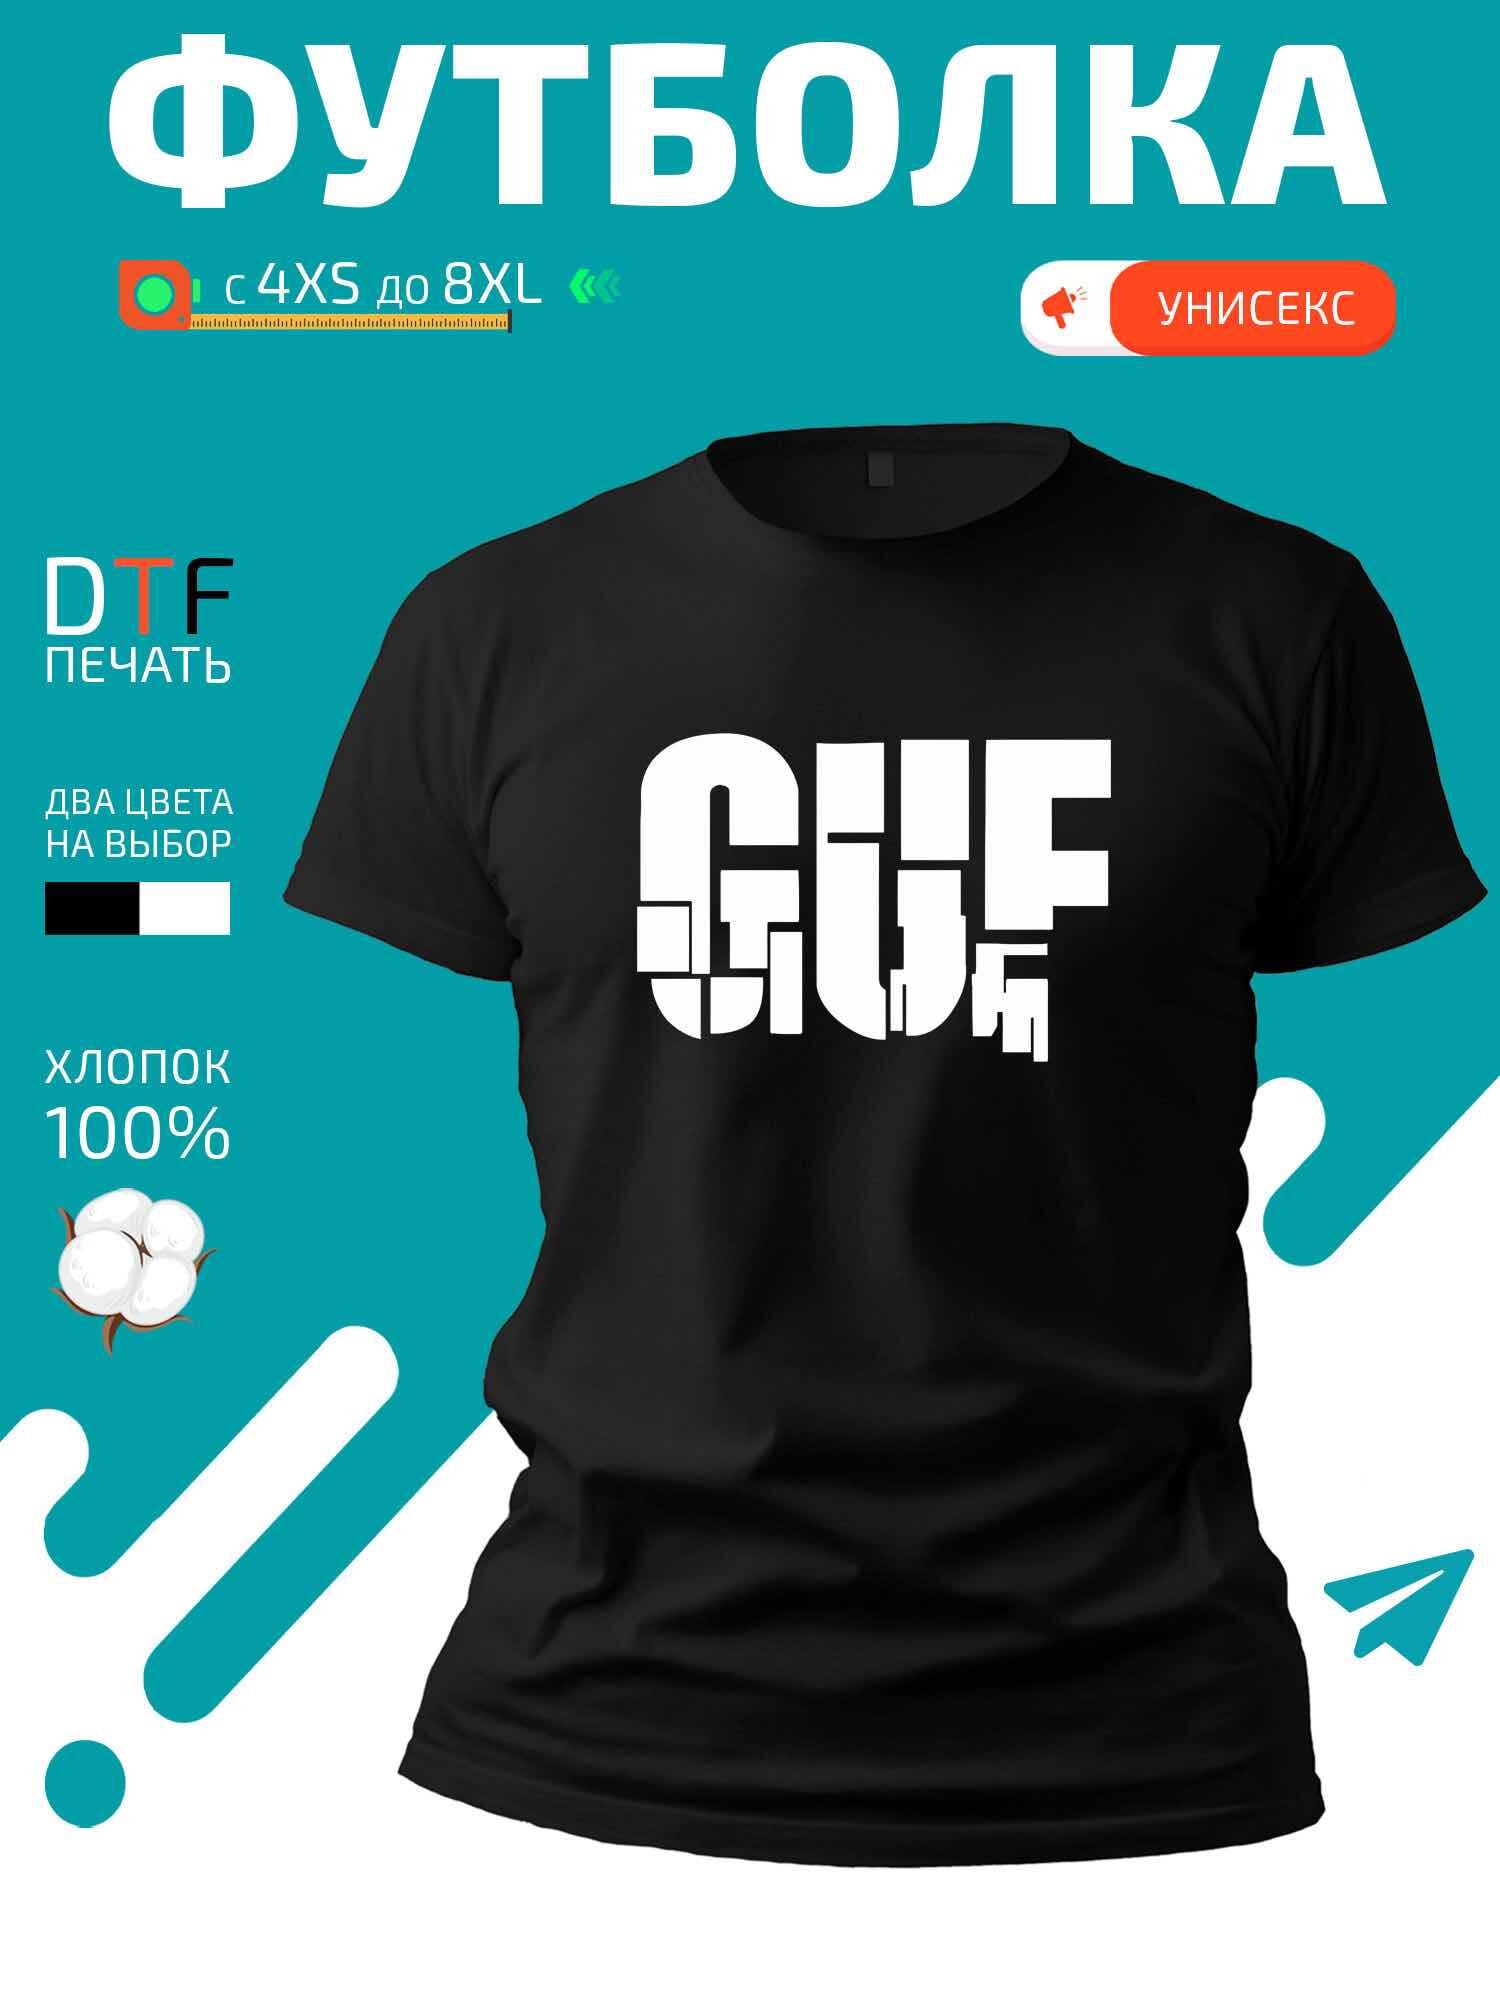 Футболка логотип Guf